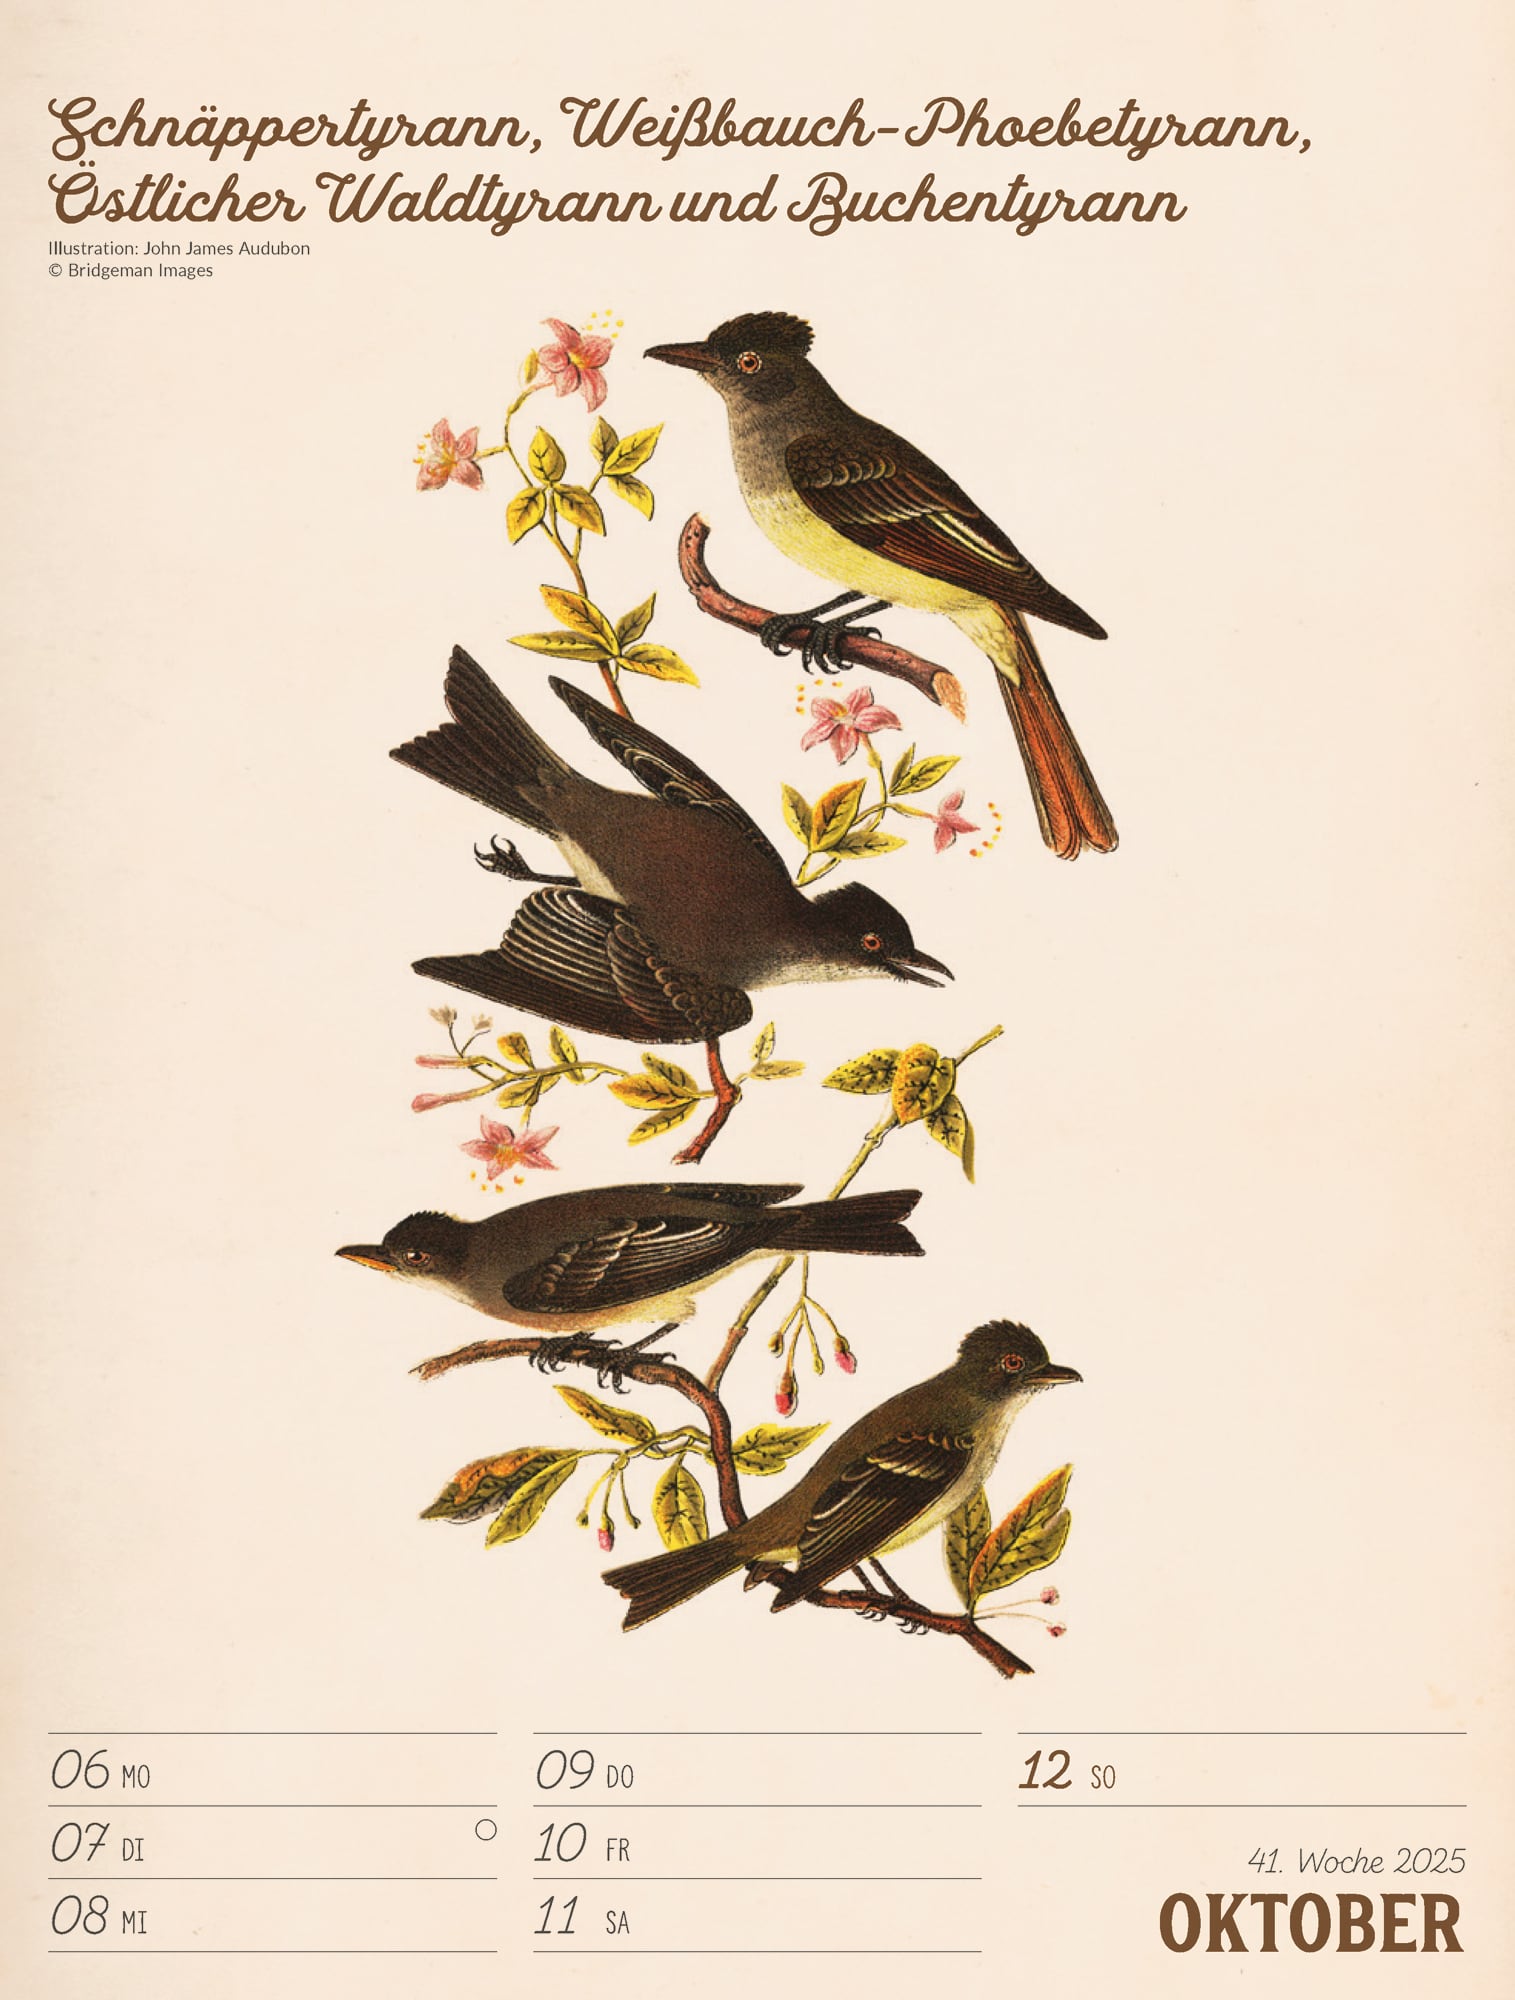 Ackermann Calendar The wonderful World of Birds 2025 - Weekly Planner - Inside View 44